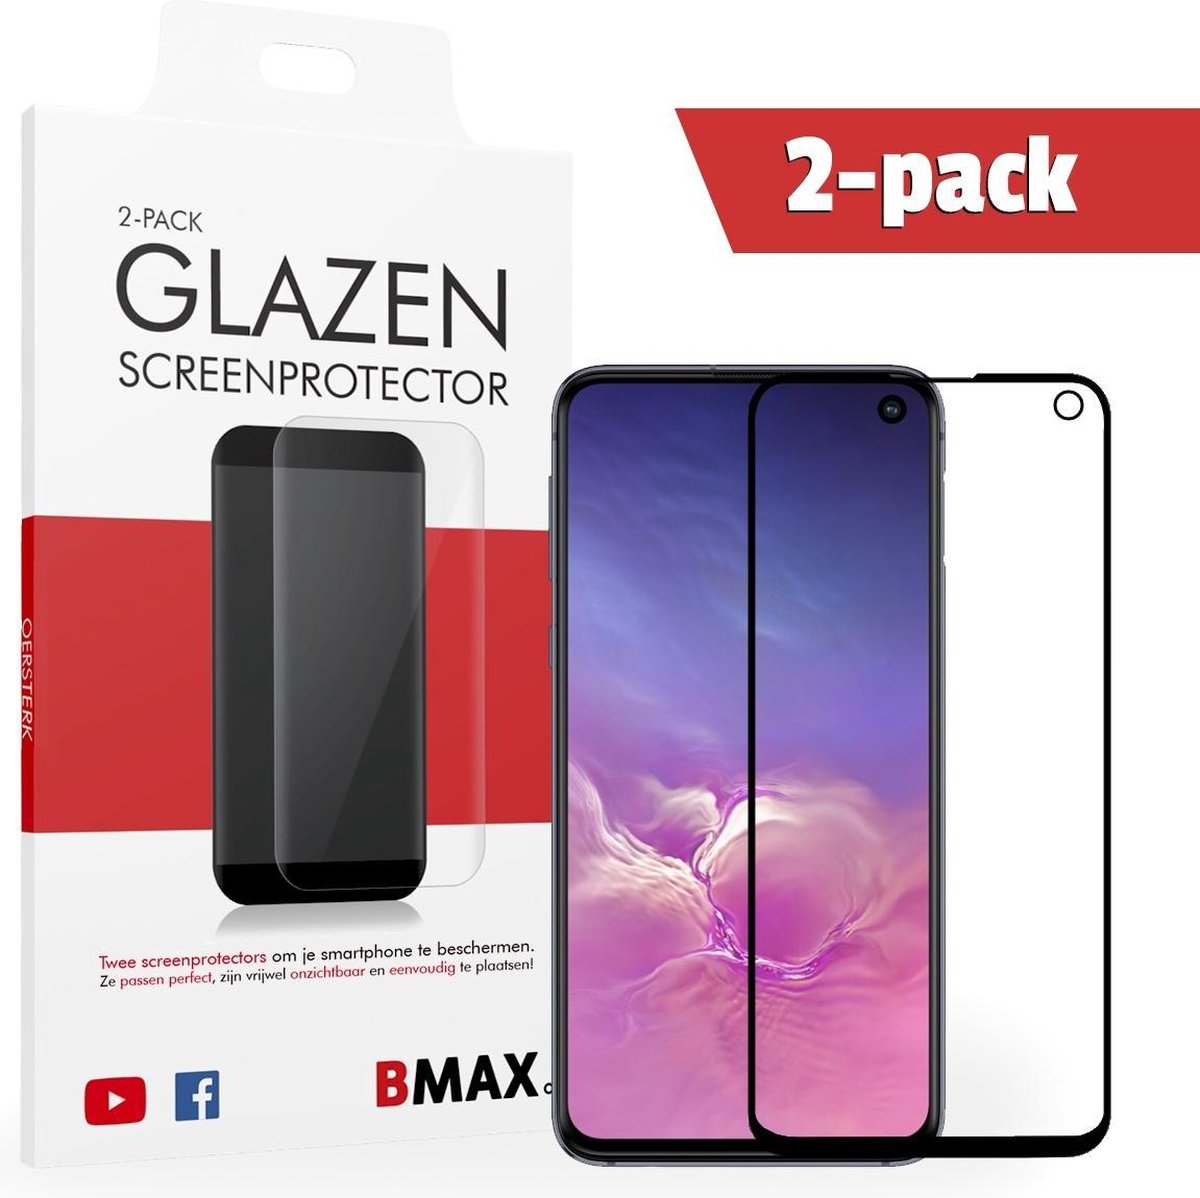 2-pack Bmax Samsung Galaxy S10e Screenprotector - Glass - Full Cover 5d